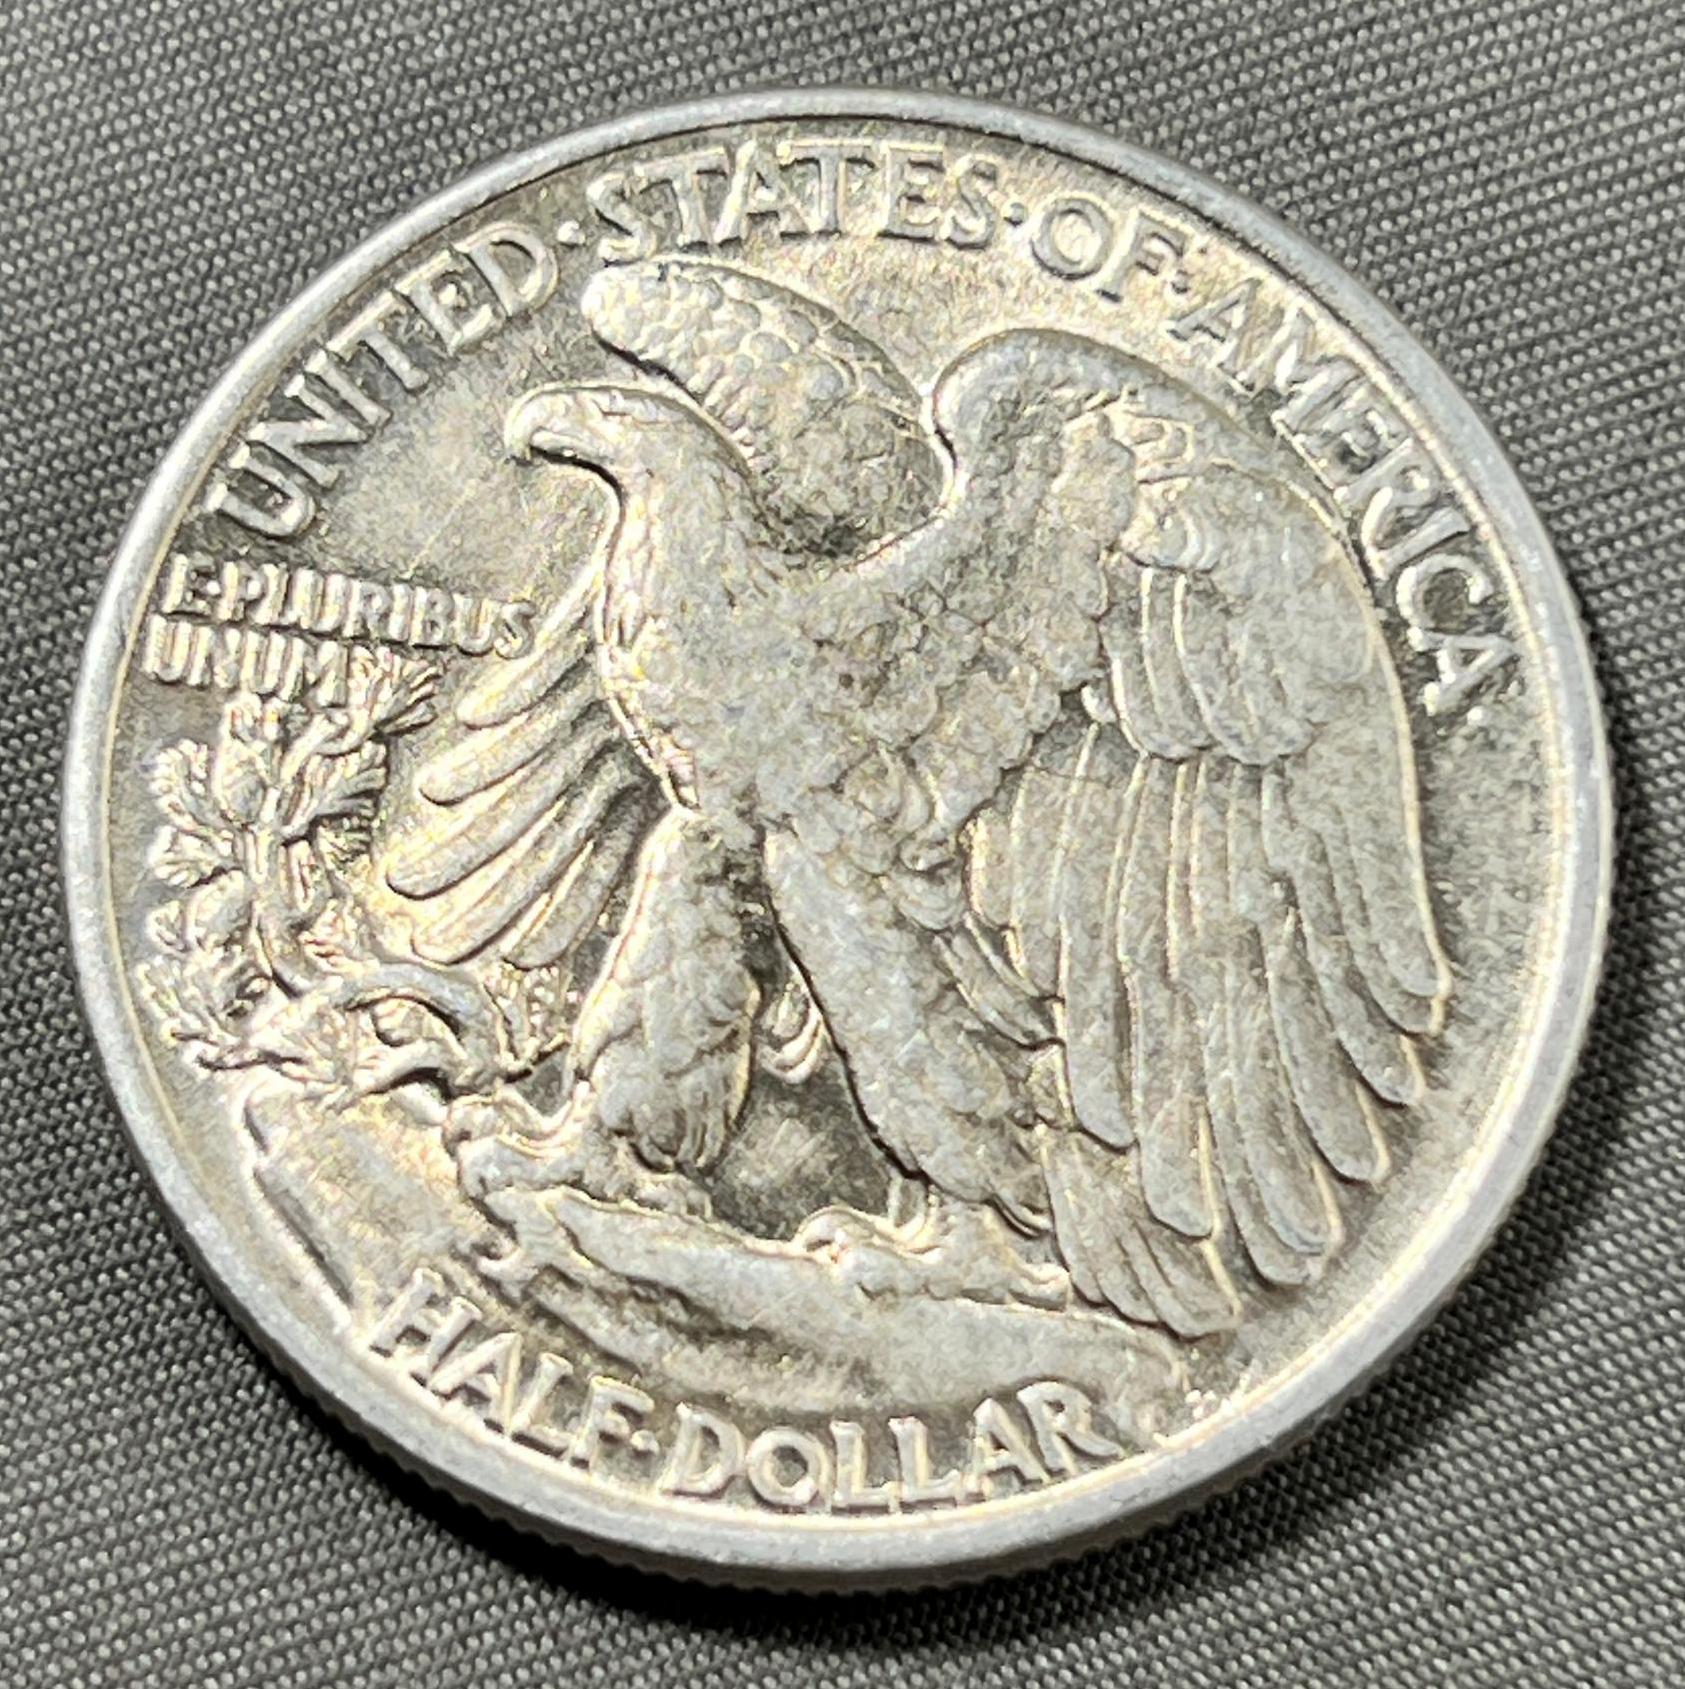 1943 US Walking Liberty Half Dollar, 90% Silver